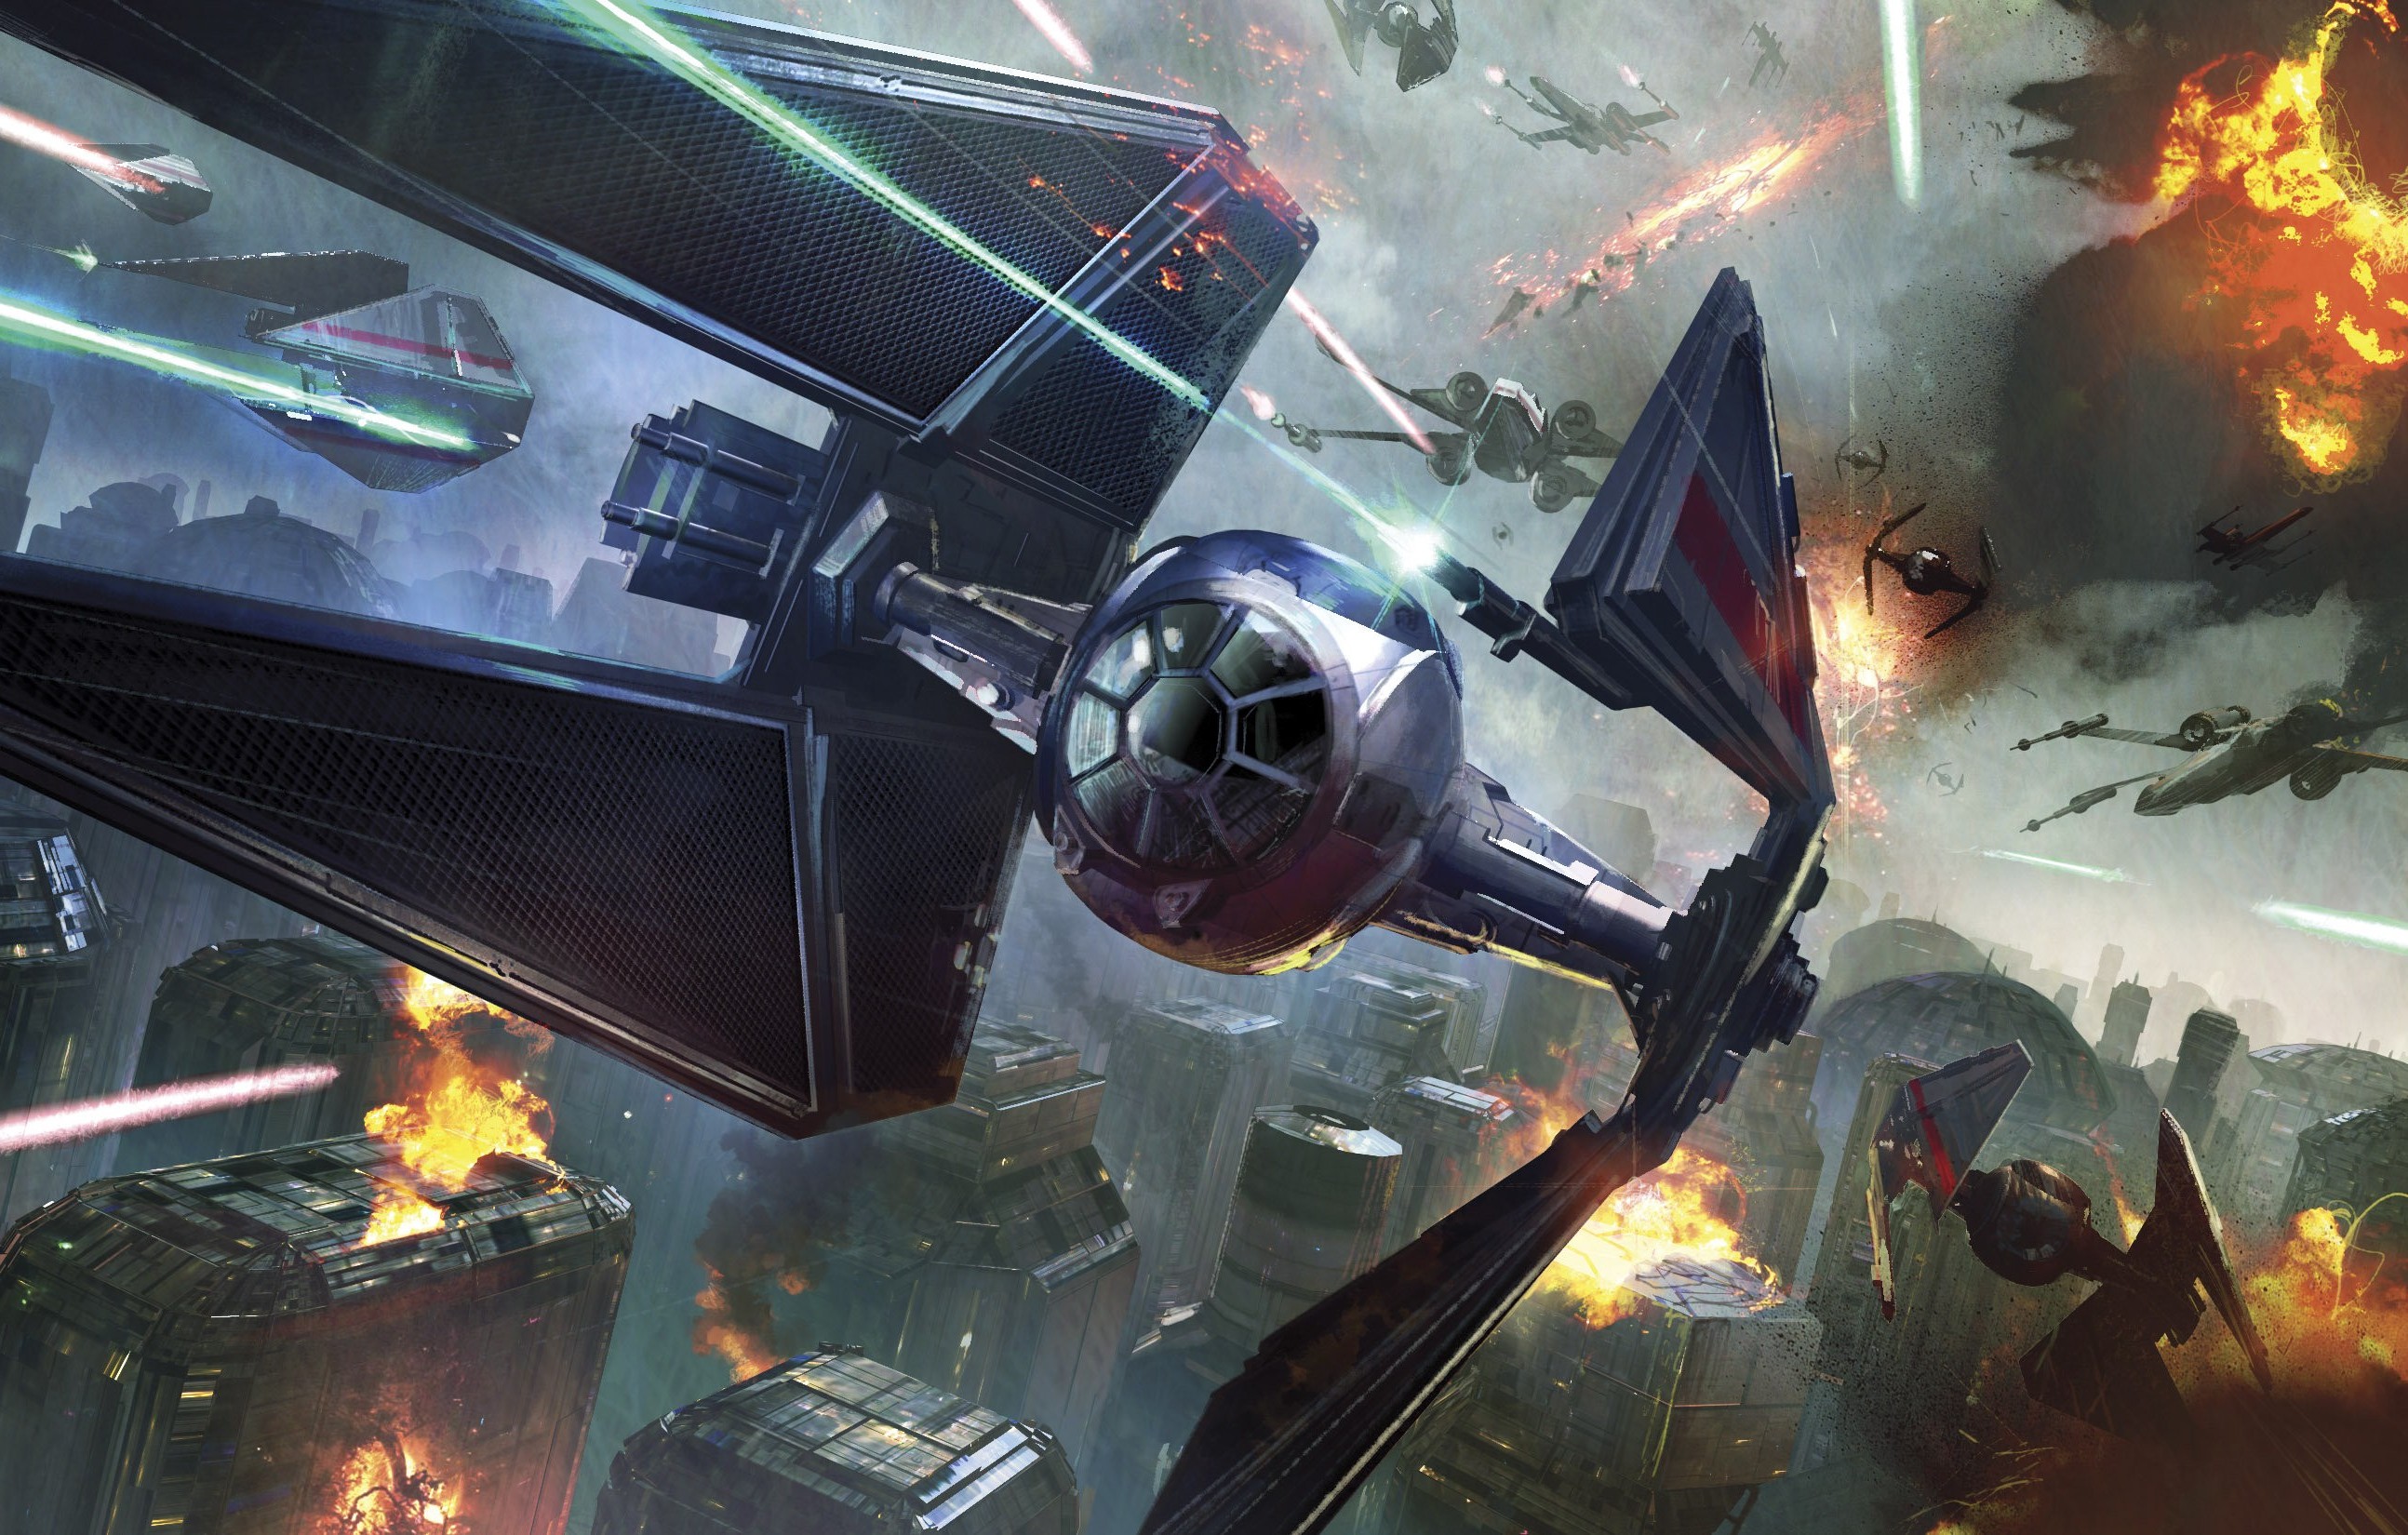 star wars clone fighter concept